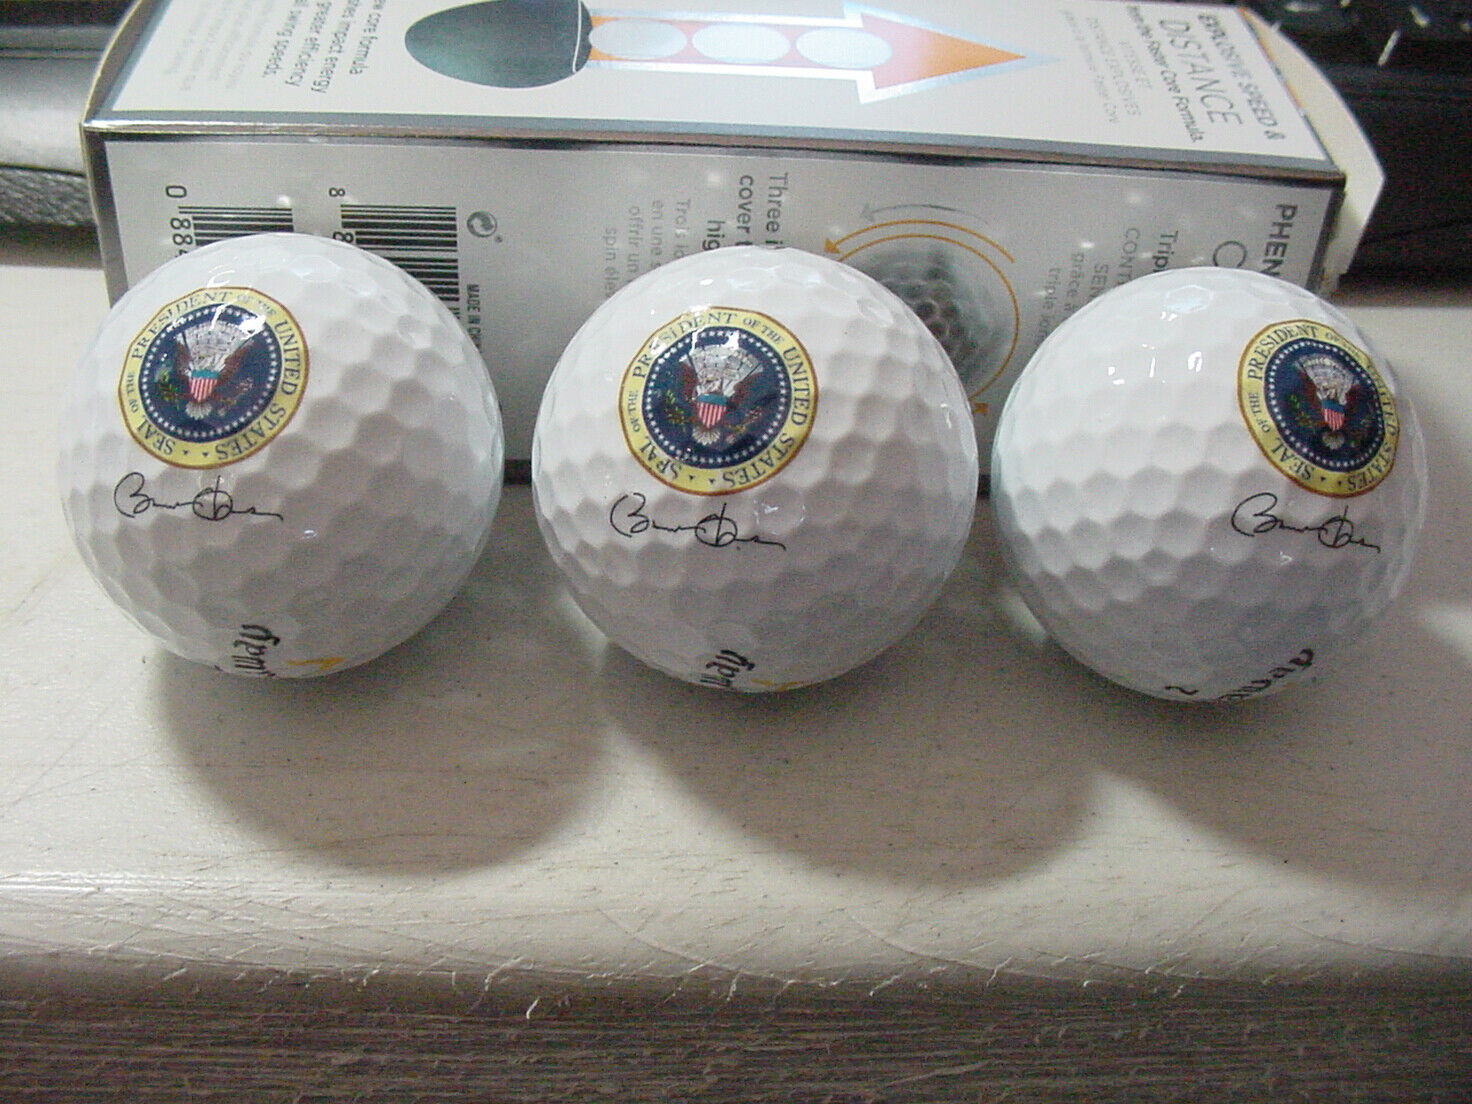 3 Presidential Barack Obama golf balls